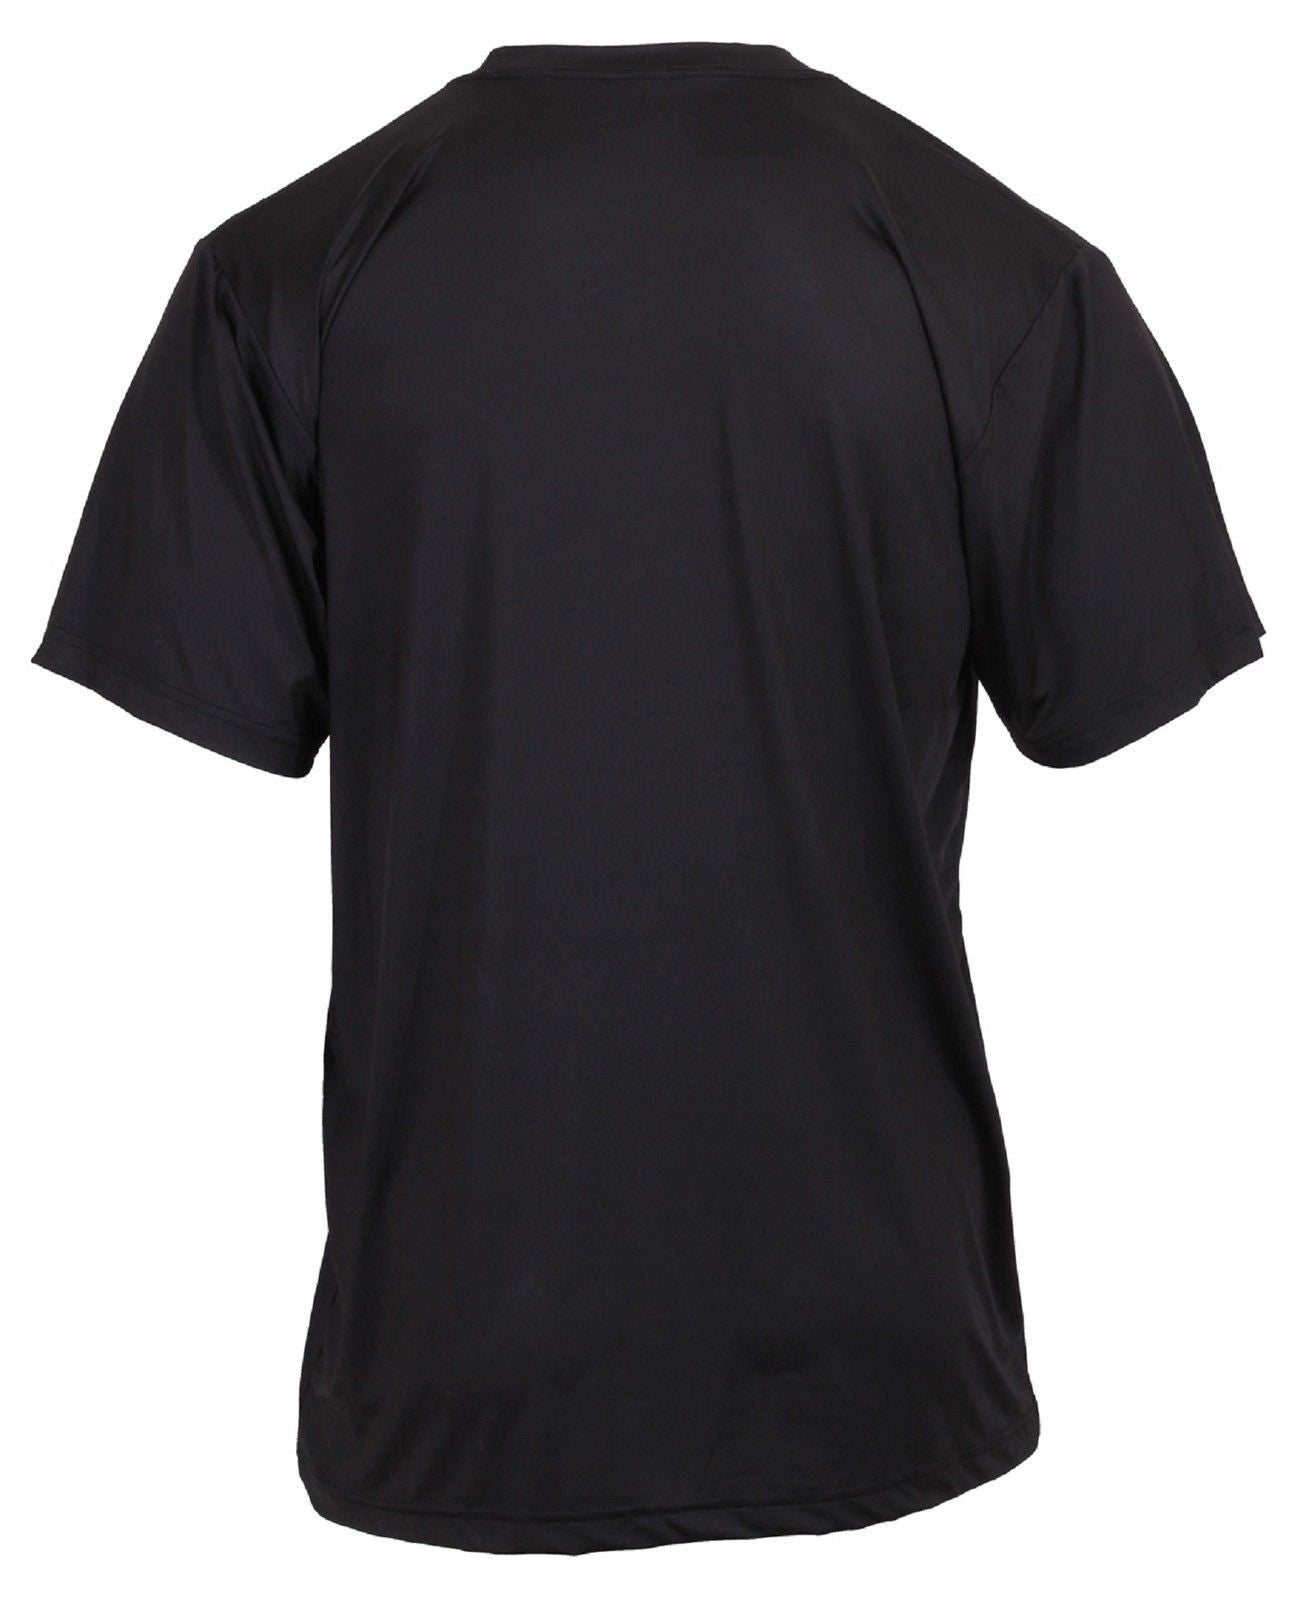 Black & Gold ARMY Performance Physical Training Shirt Rothco Mens PT Tee Shirt